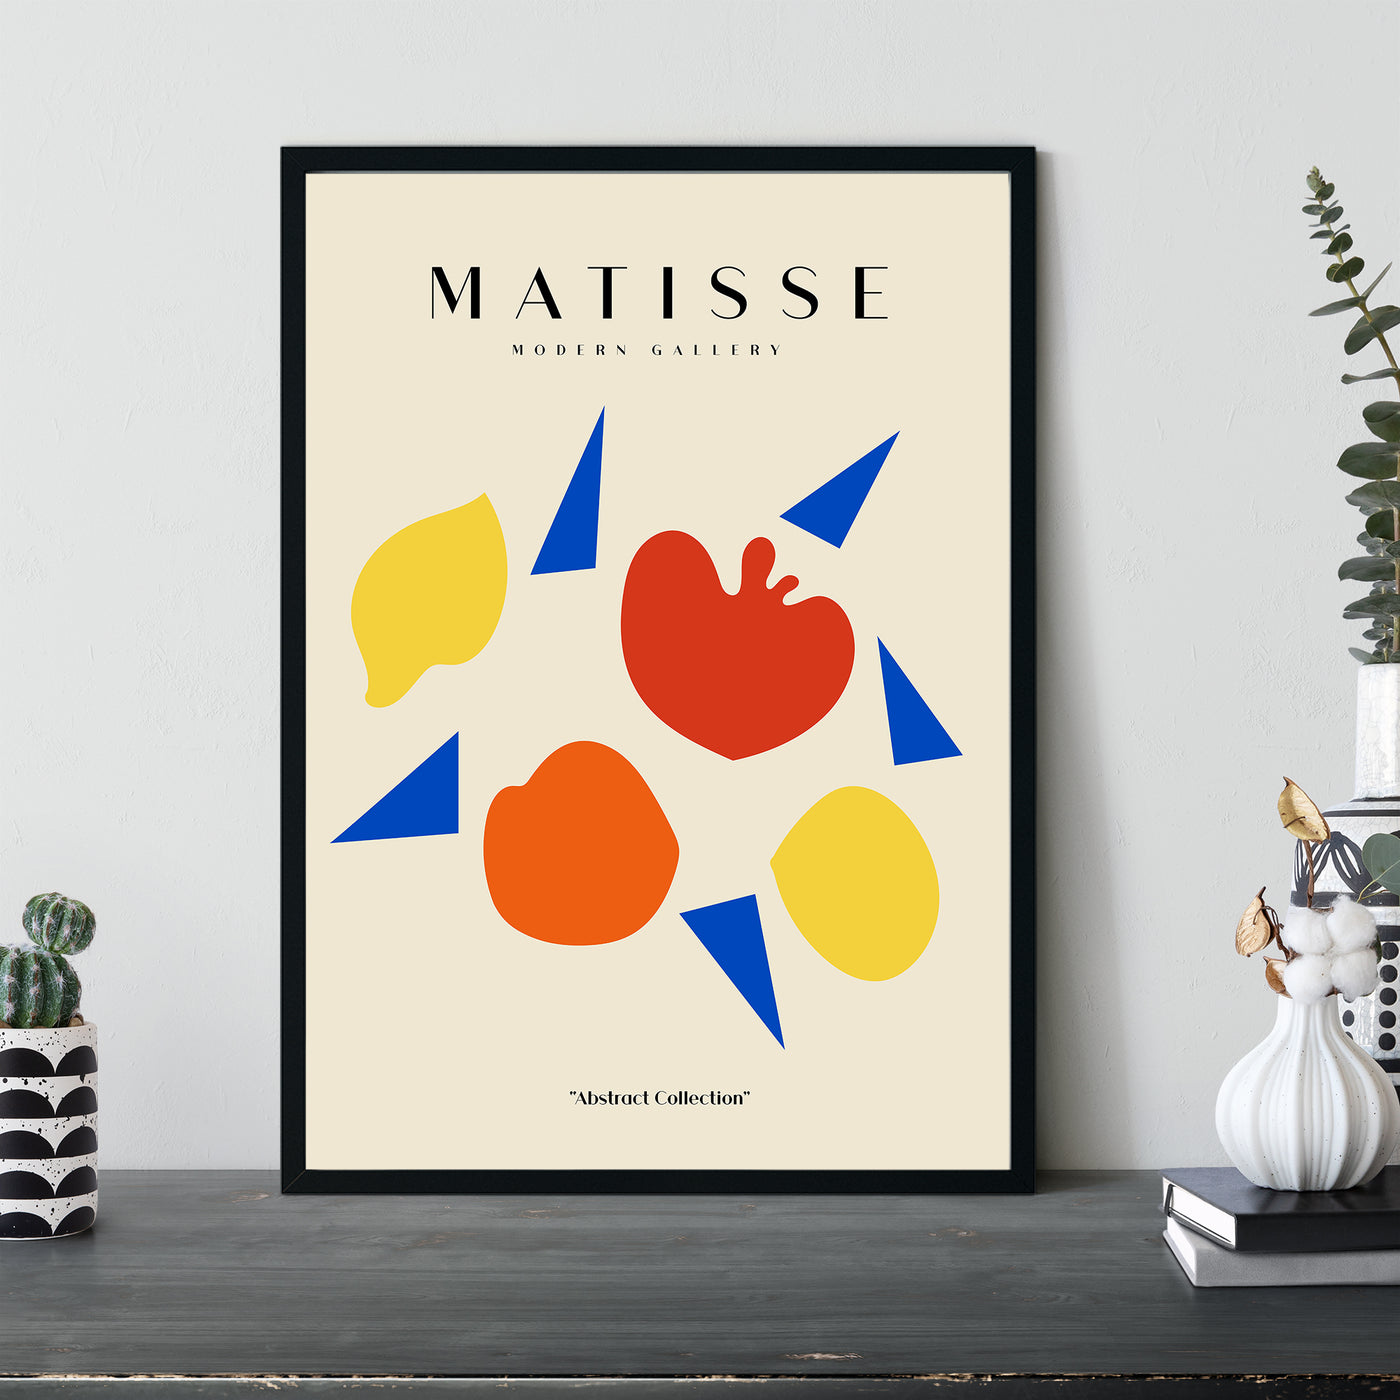 Henri Matisse - #44